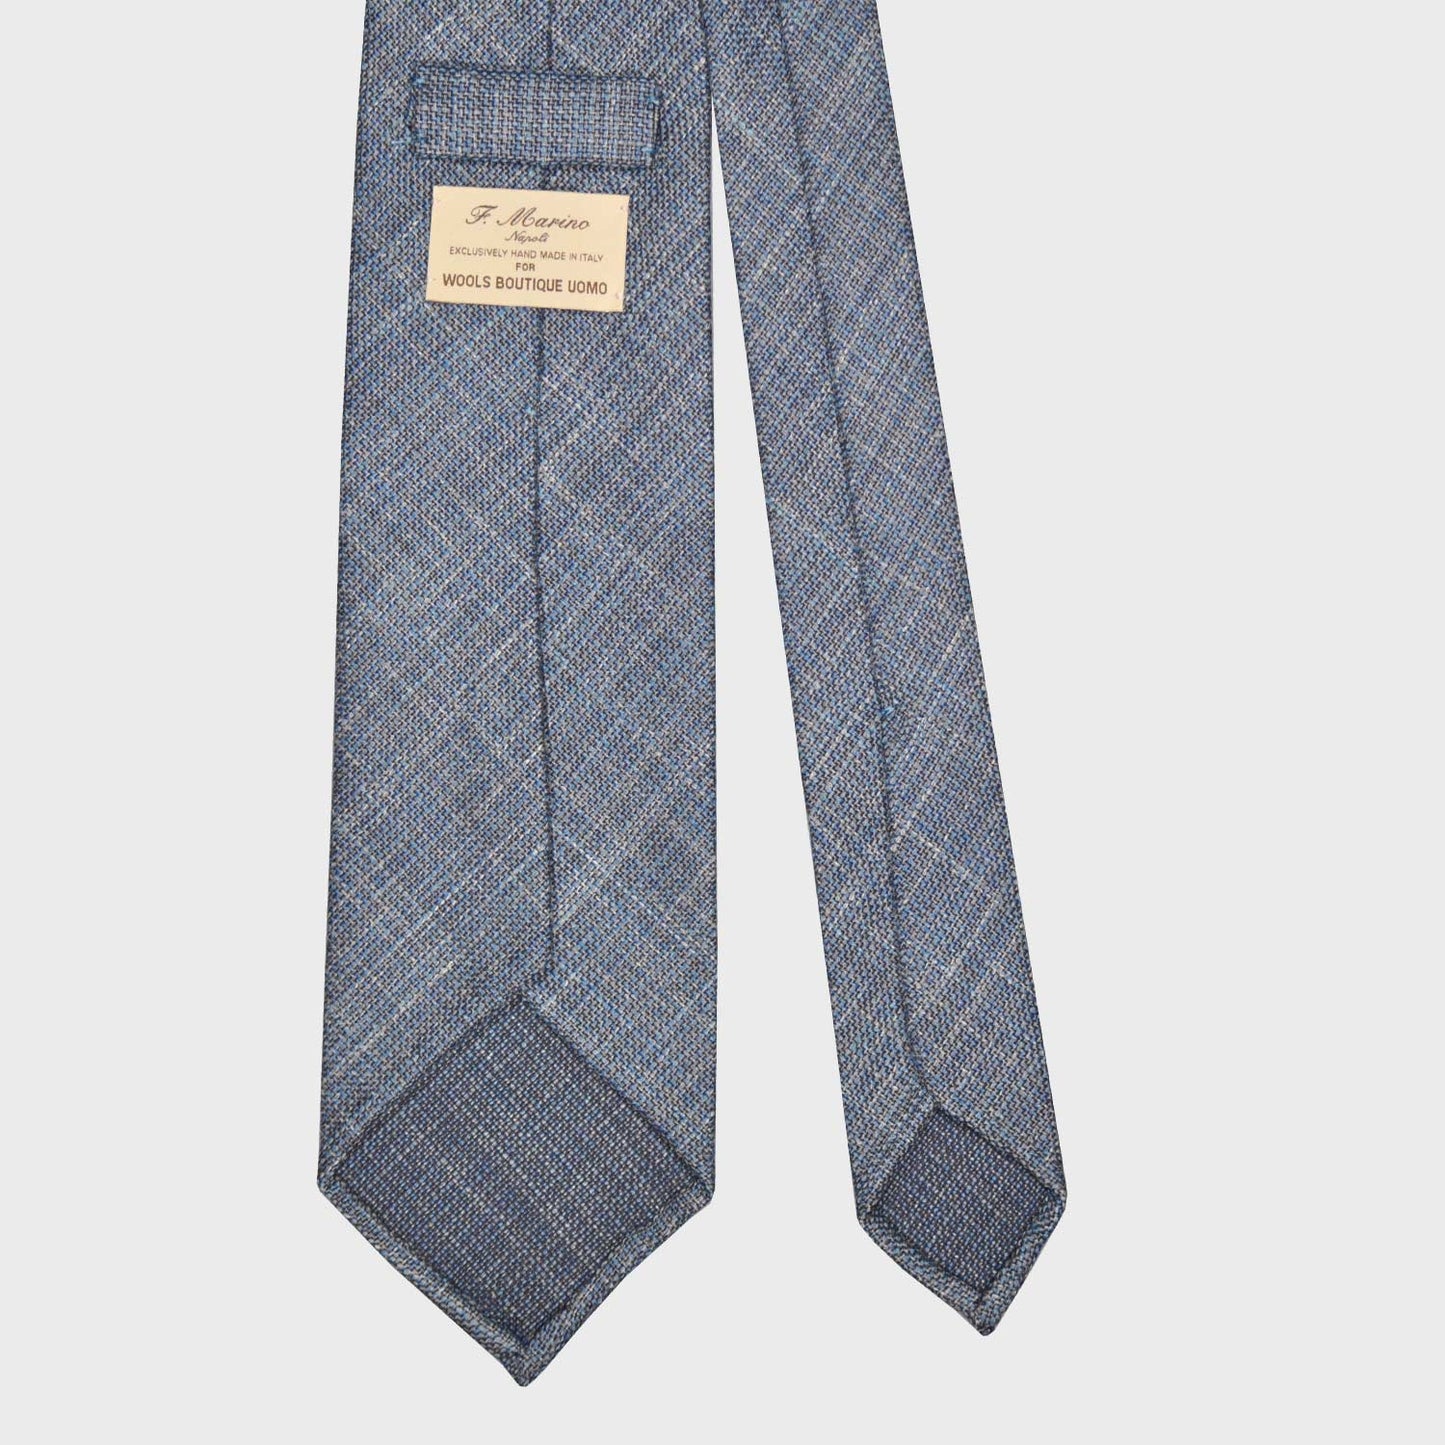 F.Marino Wool Silk Tie 3 Folds Mélange Denim Blue-Wools Boutique Uomo